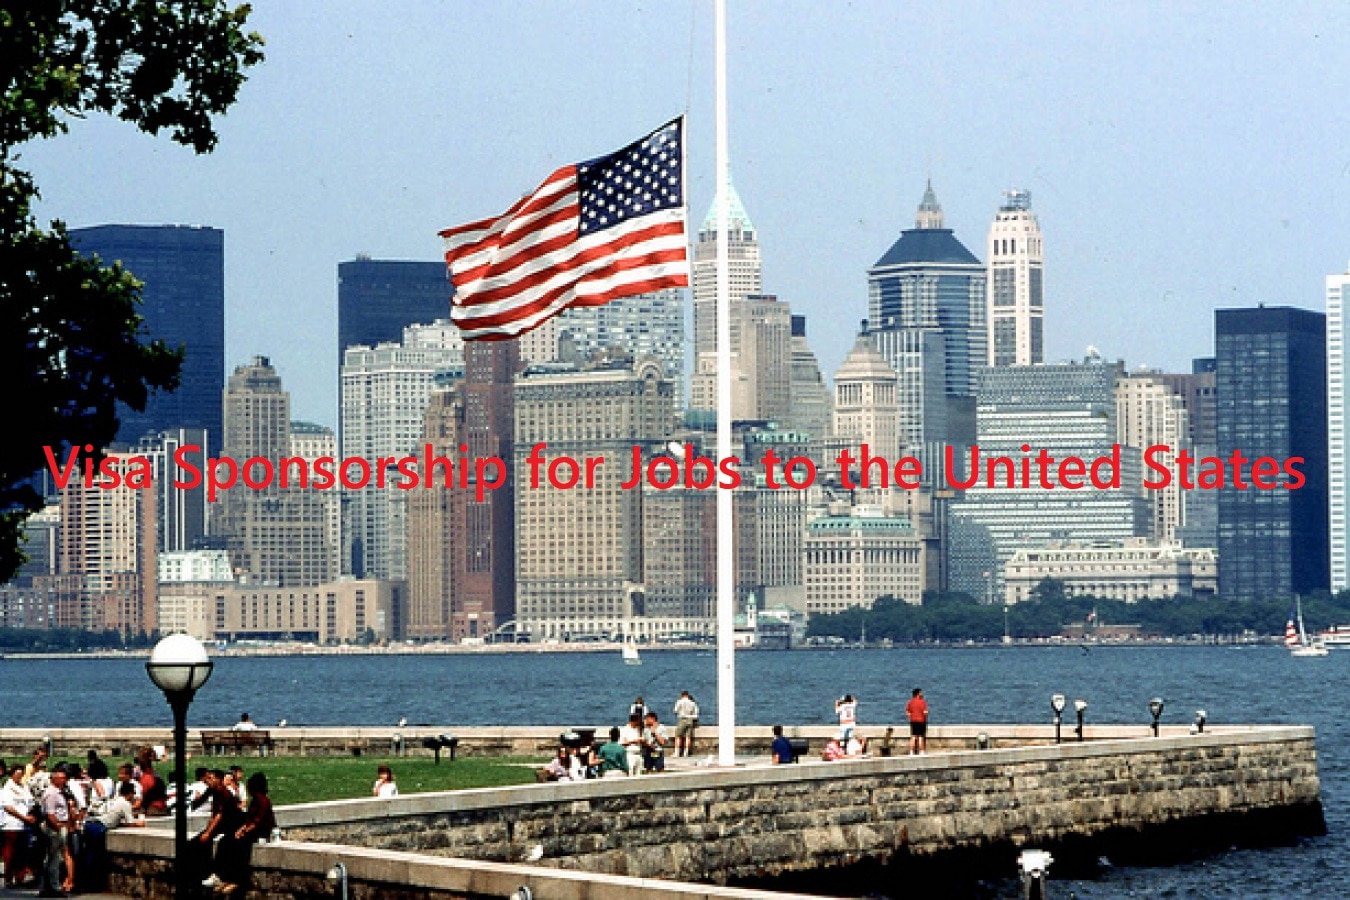 Visa Sponsorship for Jobs to the United States